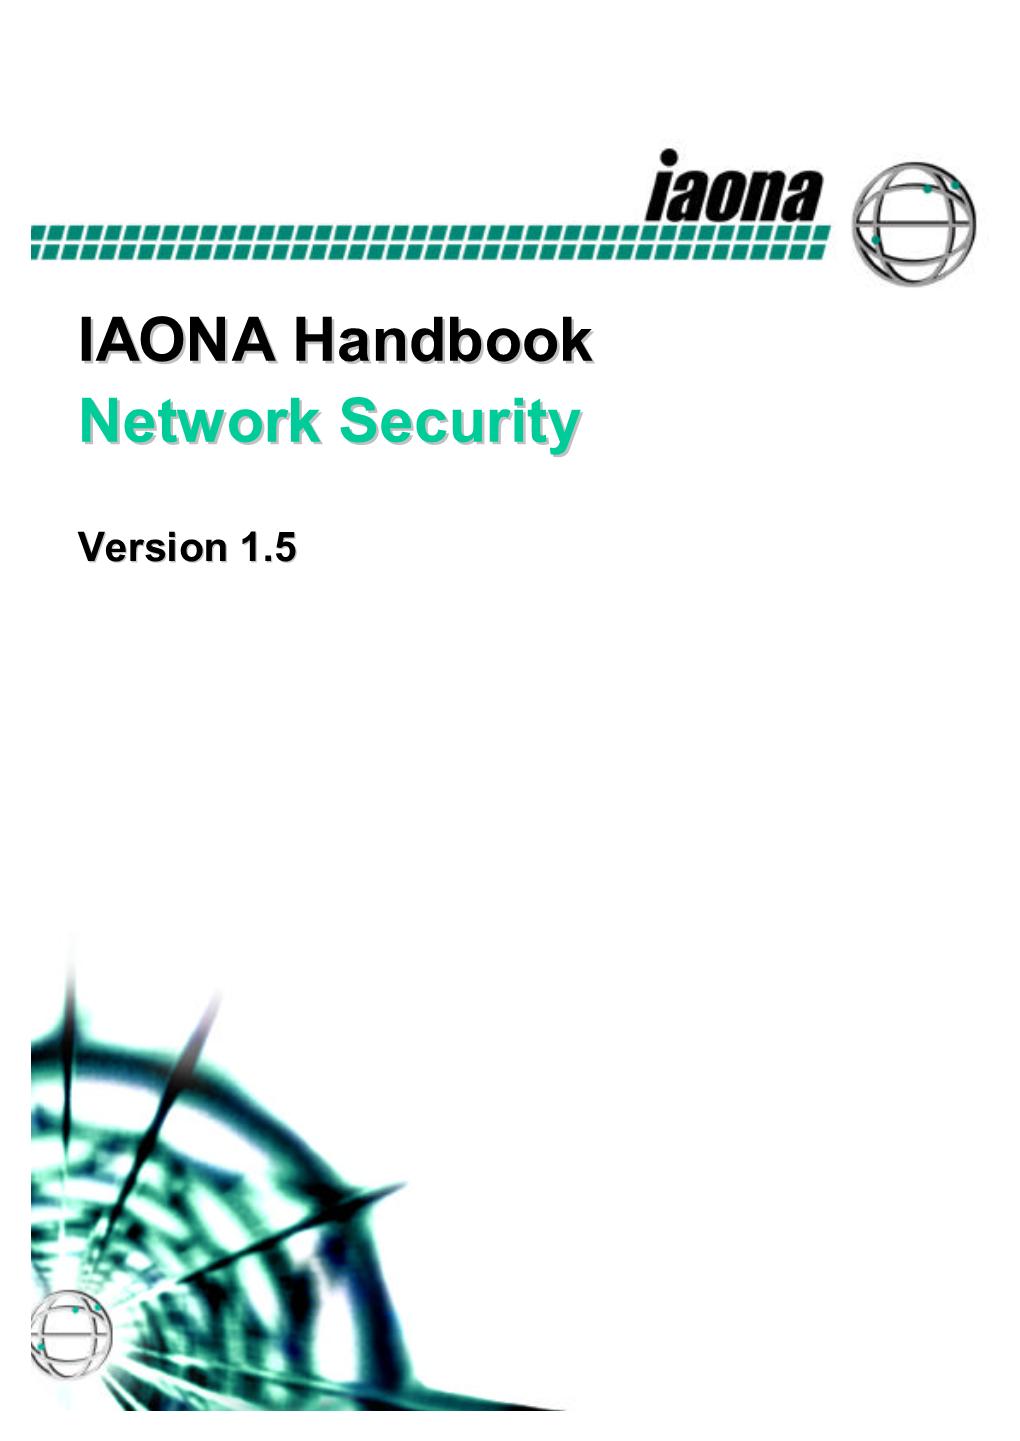 IAONA Handbook Network Security 2 Contents